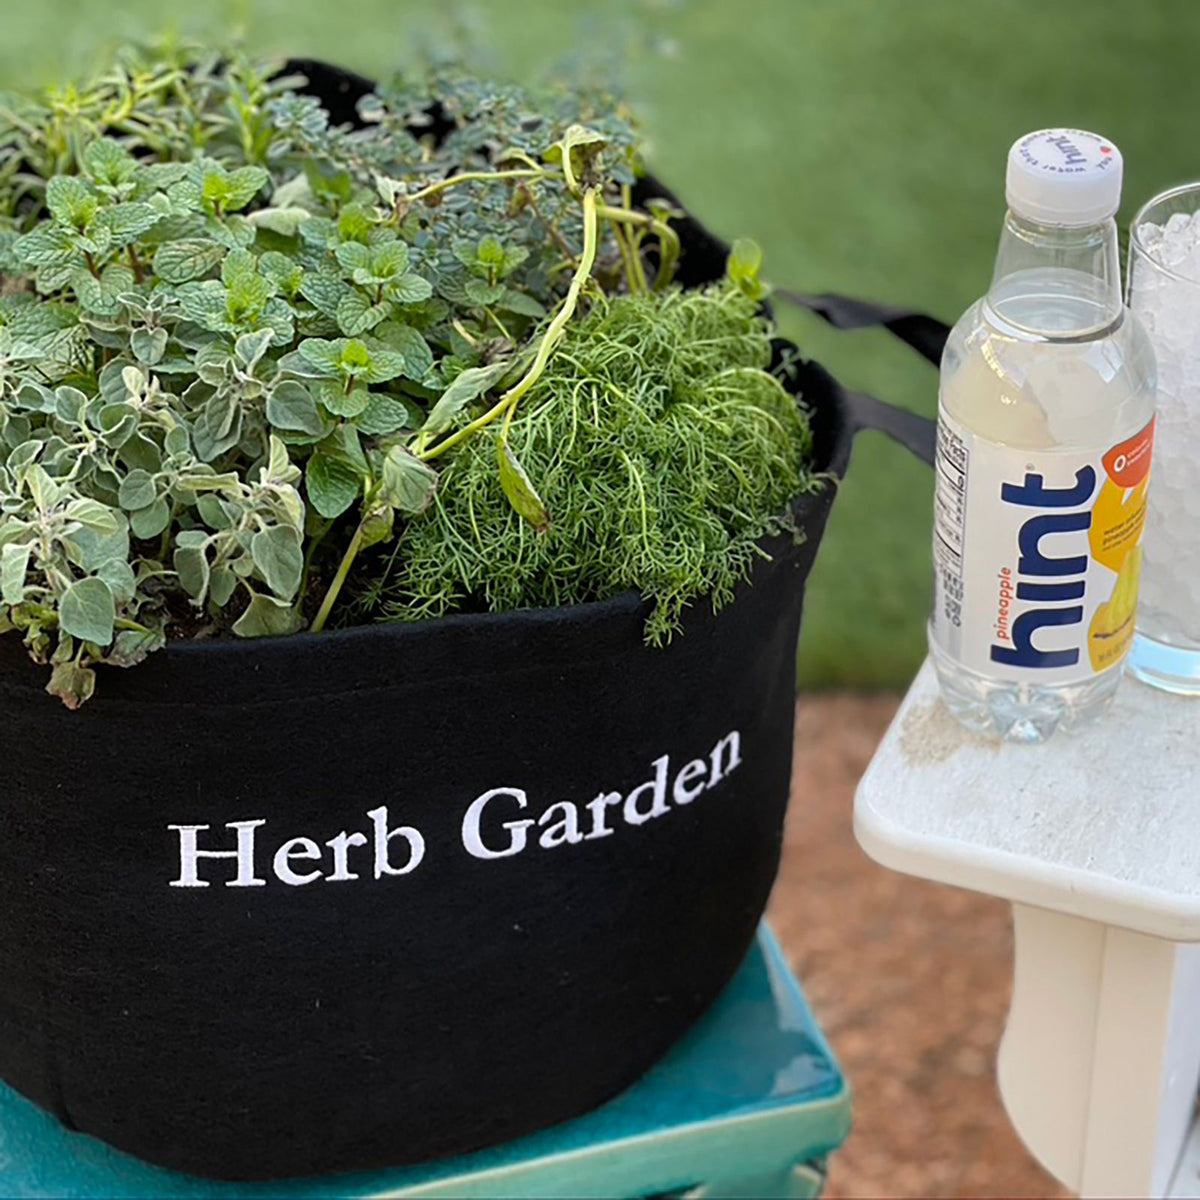 Herb Garden Kit with culinary seasonal herbs